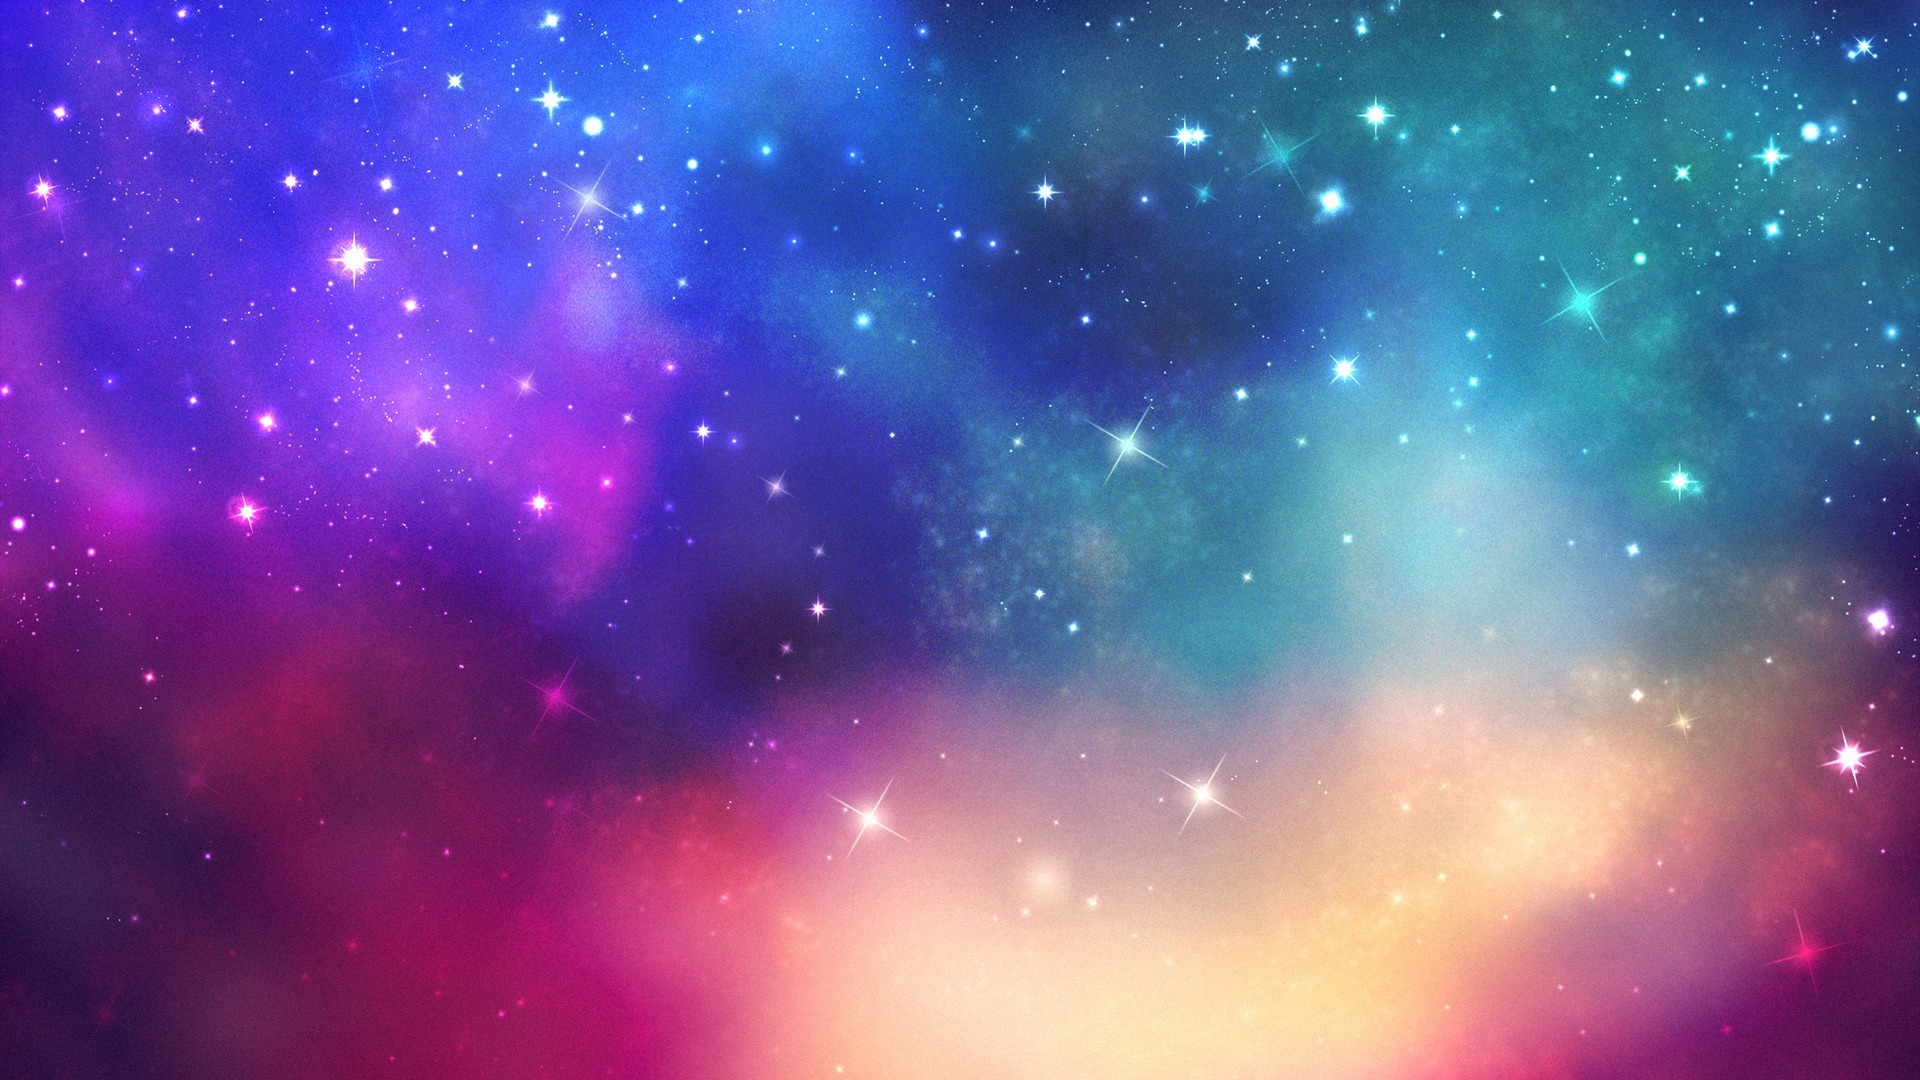 stars space wallpaper colors light mvcmlqa68 tumblr 7dllnsn 1920x1080